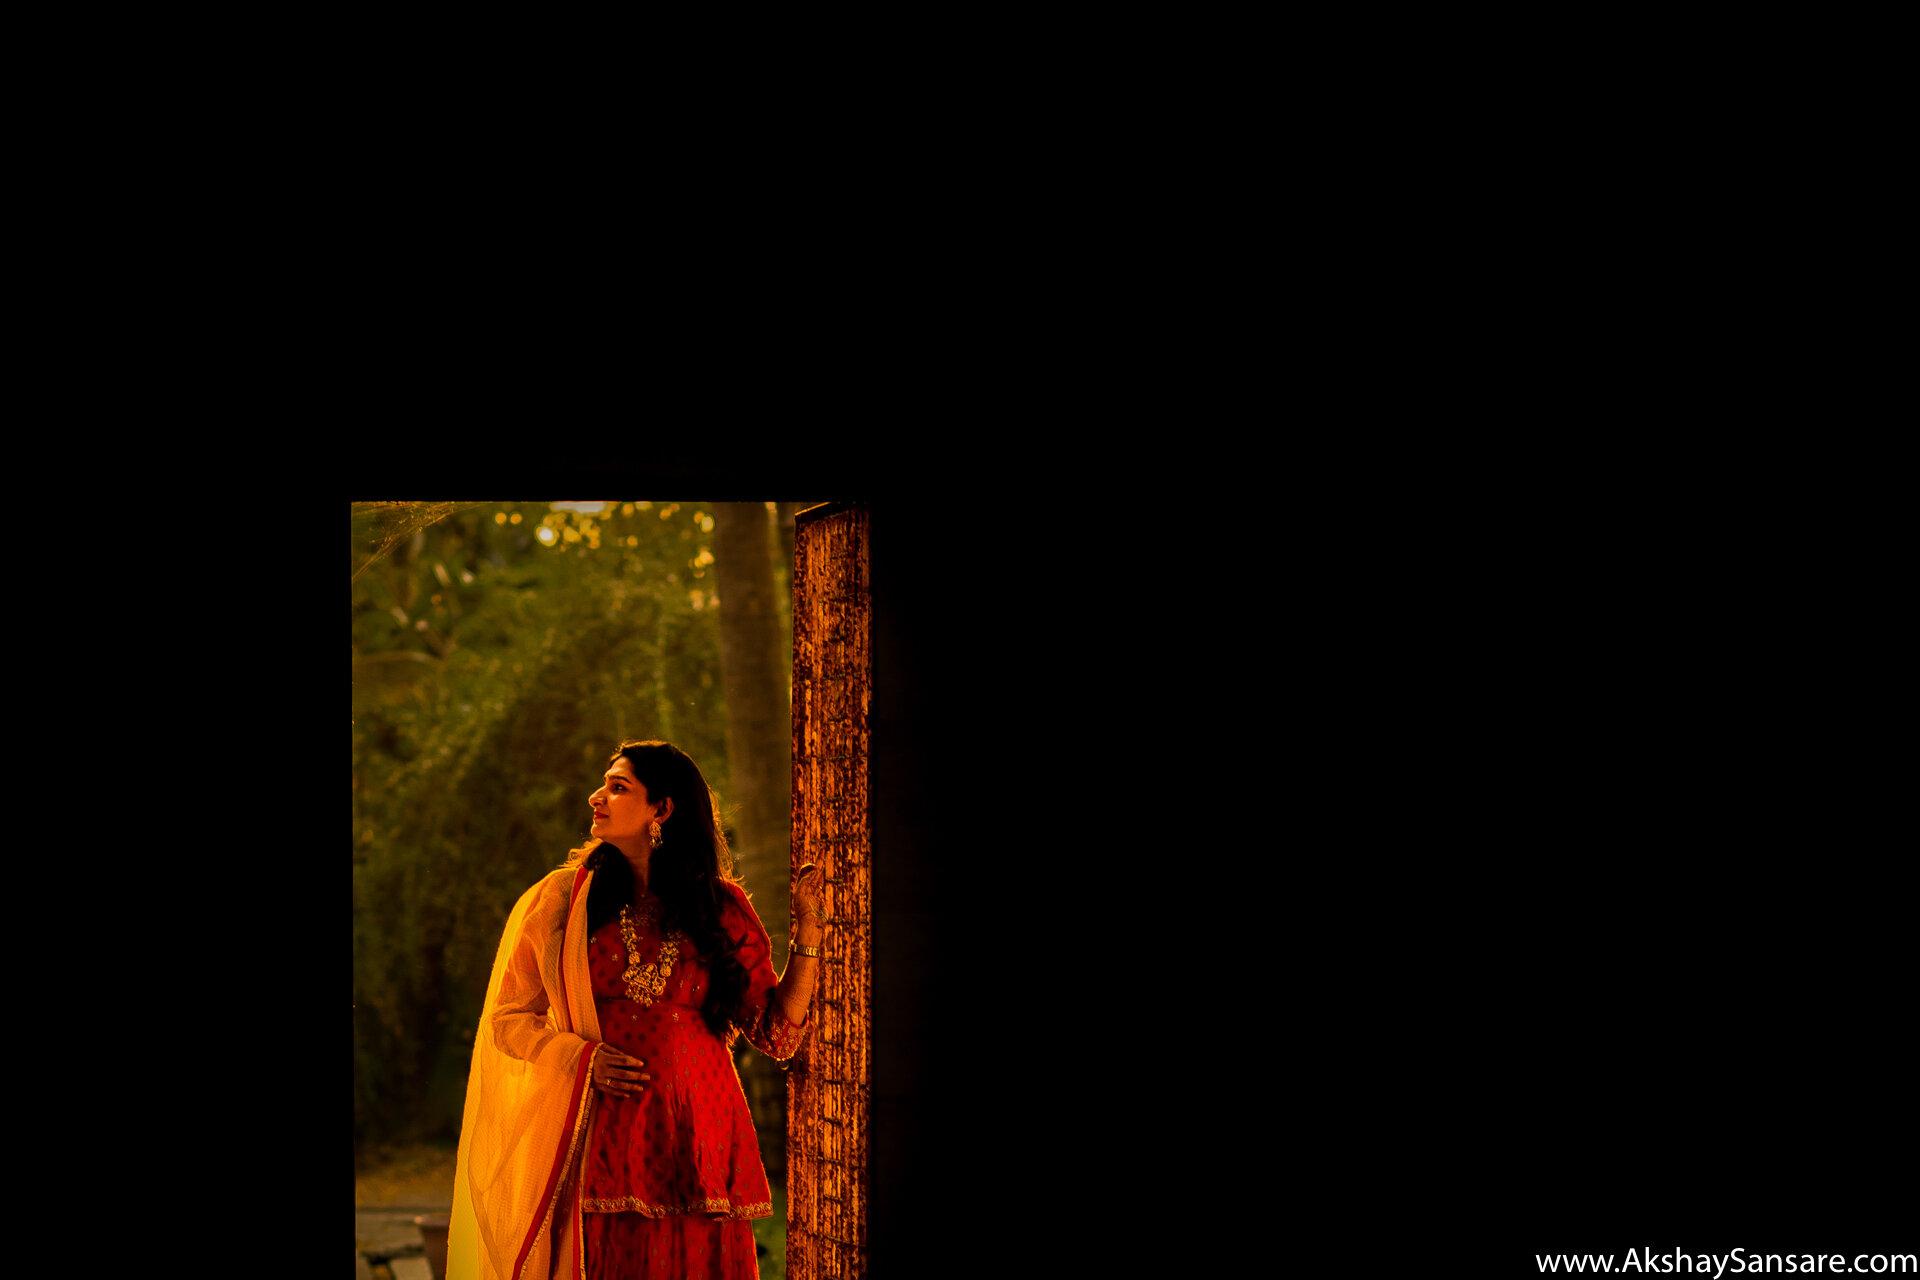 Anuj x Malvika + 1 Akshay Sansare Photography & Films Candid Photographer Best in mumbai Cinematic wedding films-25.jpg